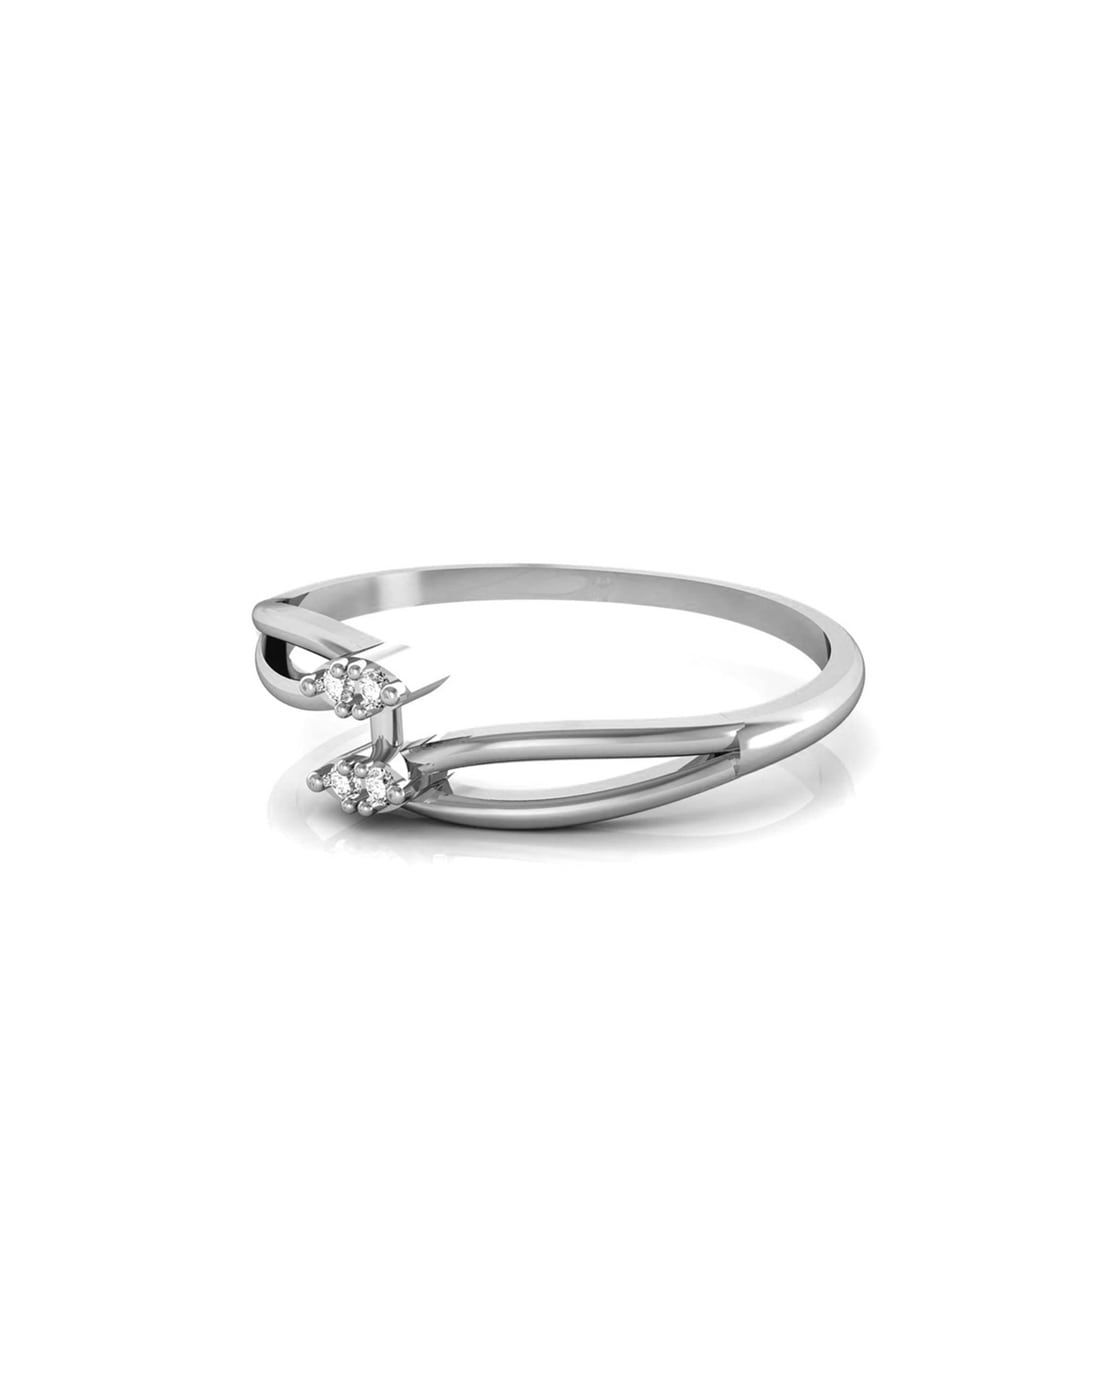 Ladies Princess Cut Diamond Engagement Ring, Platinum Claw and Channel Set  Design, Princess Leo Cut Diamond 1.96ct, Round Brilliant Cut Diamonds  1.31ct Total (6) - Blair and Sheridan